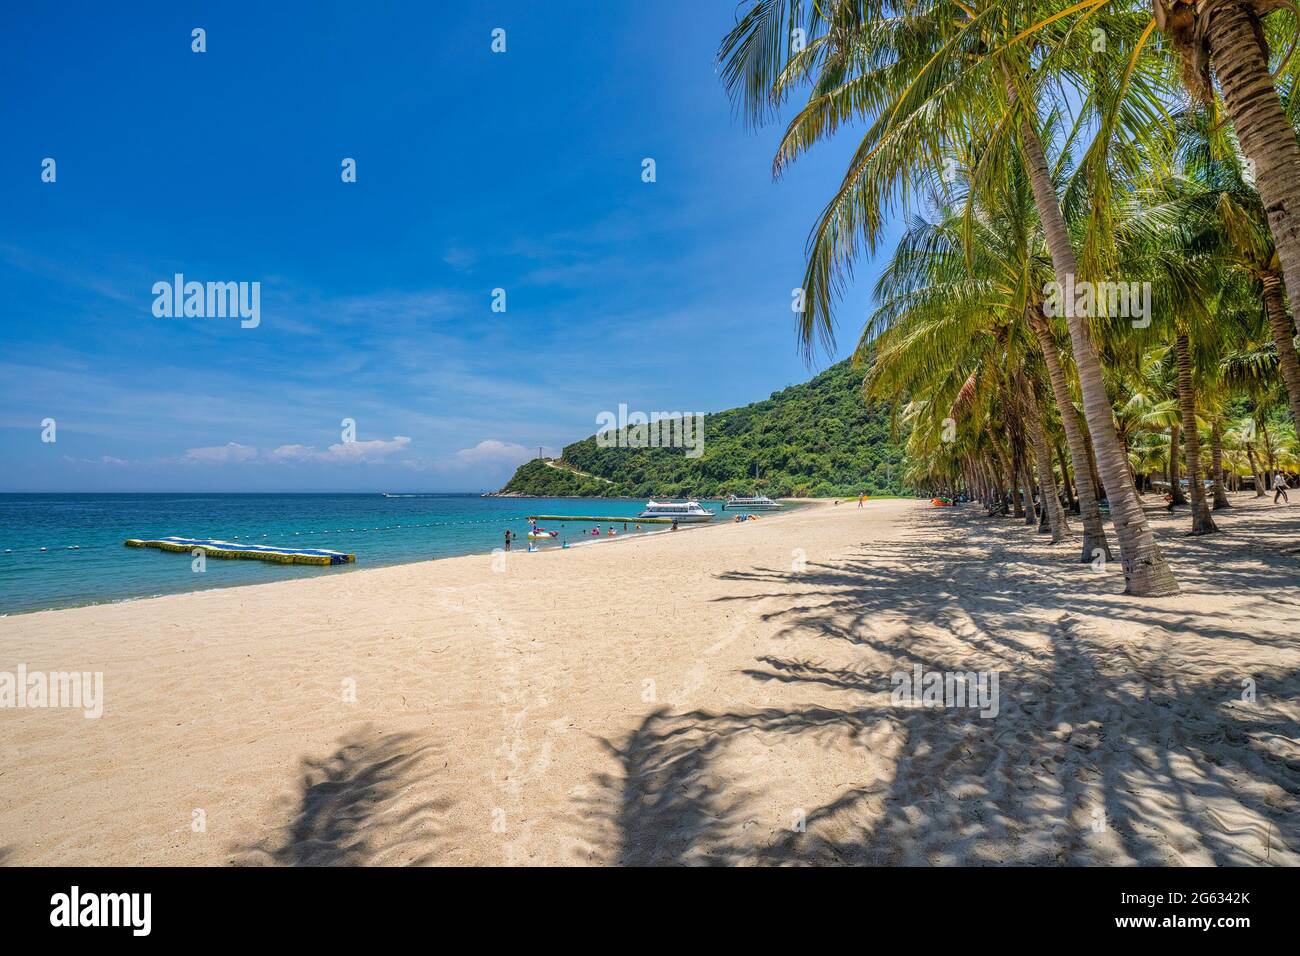 Ong beach, Cu Lao Cham island near Da Nang and Hoi An, Vietnam Stock Photo